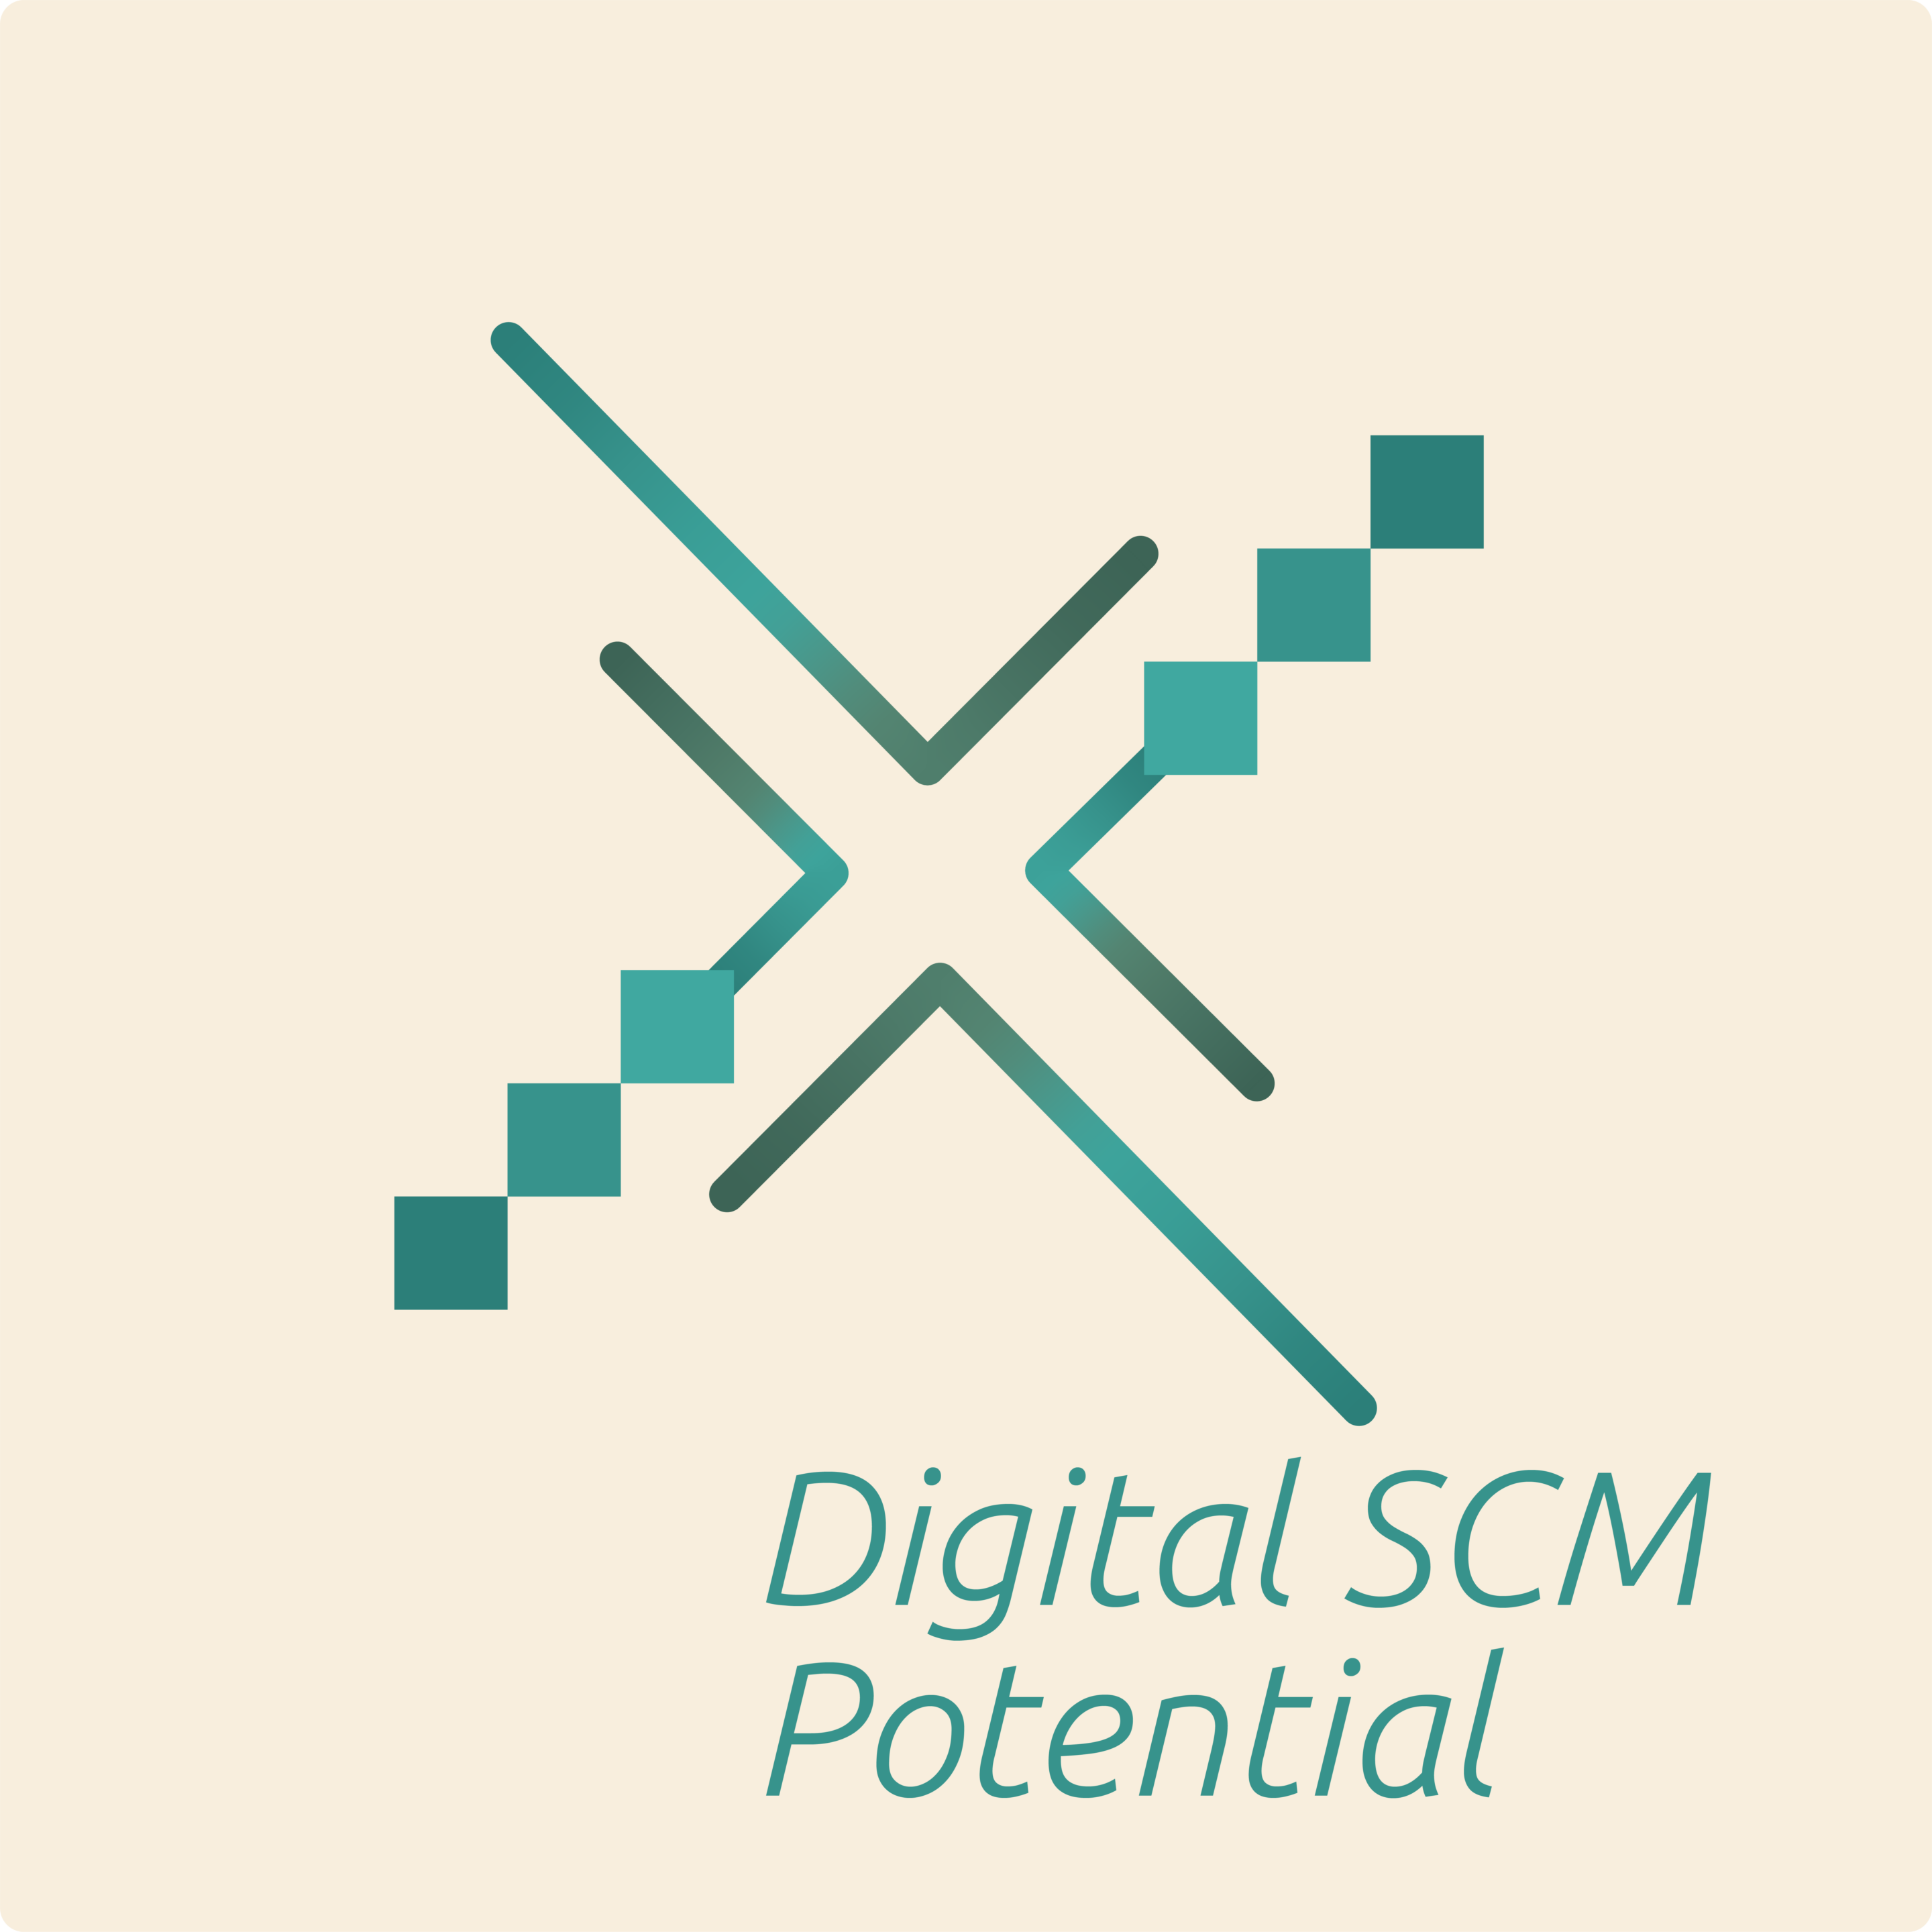 Digital SCM Potential